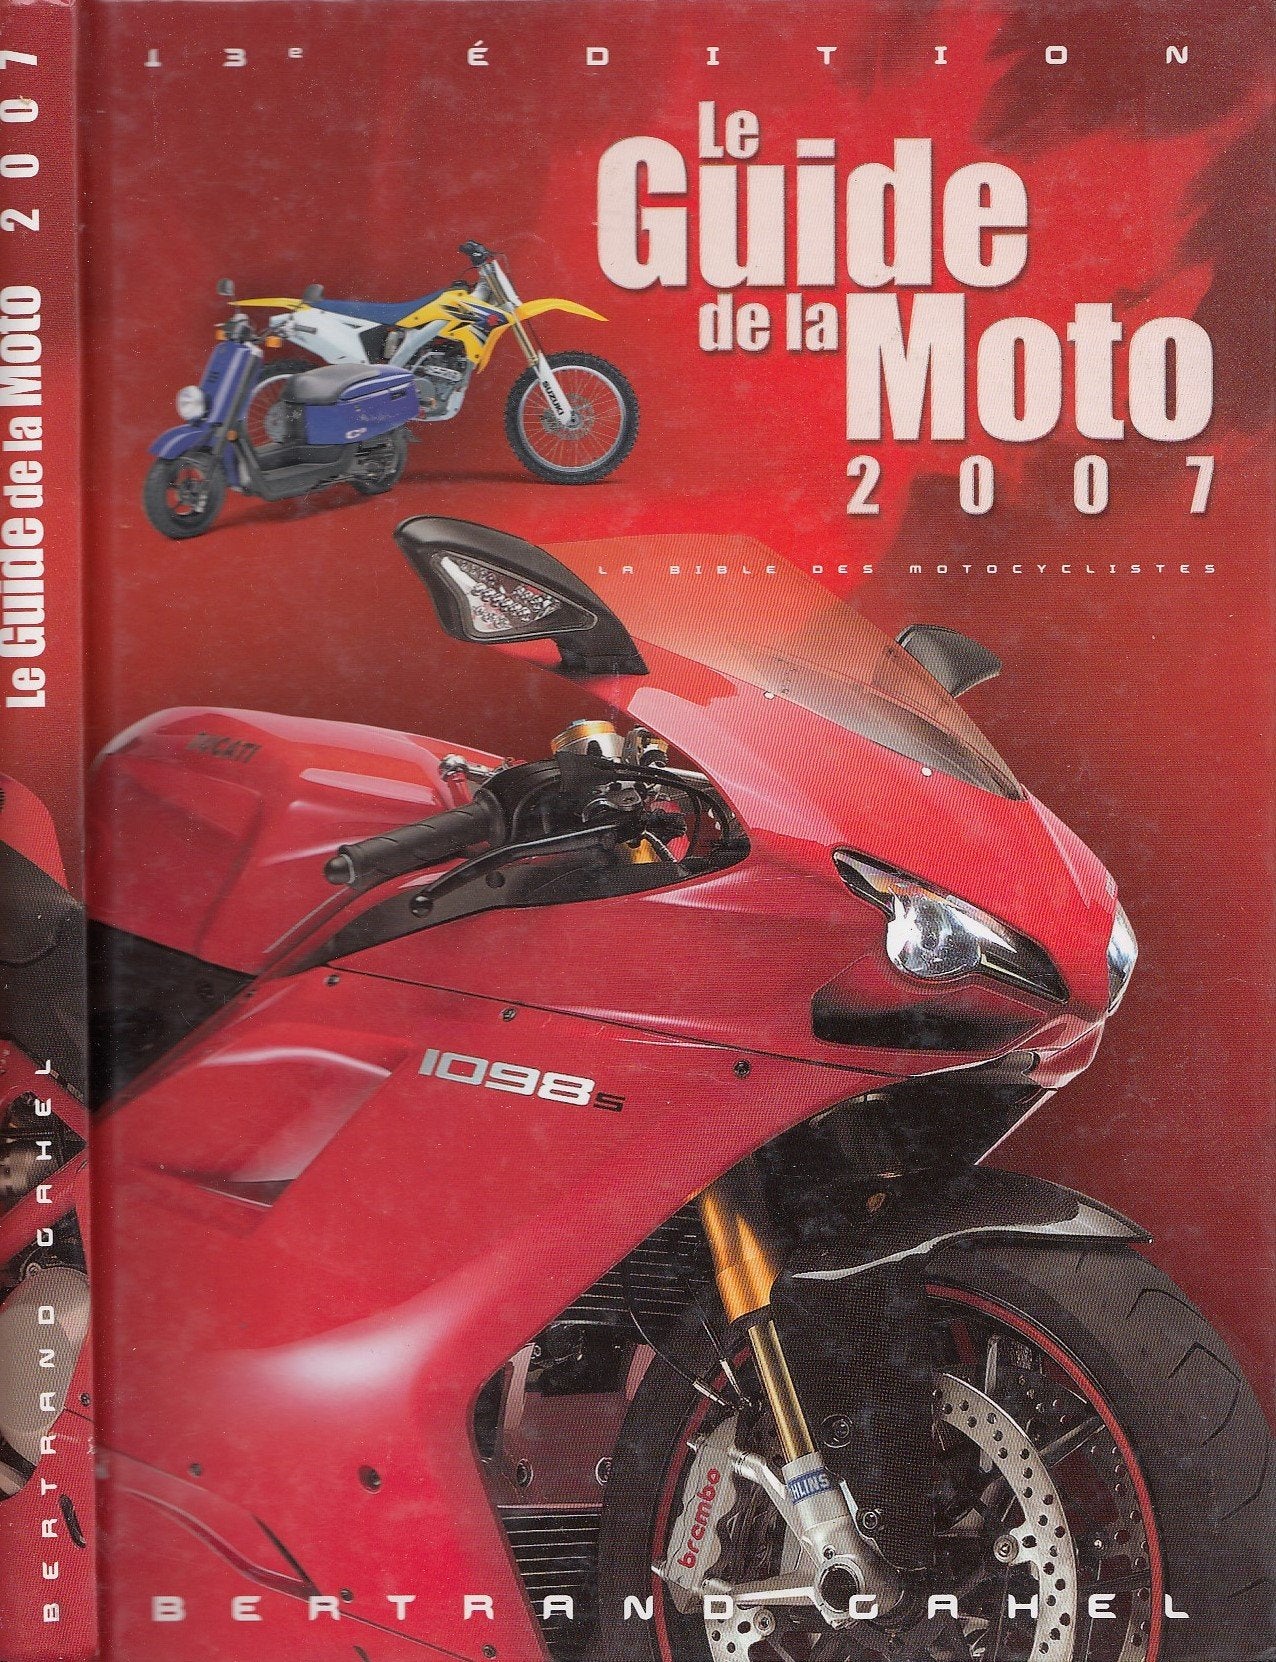 Le guide de la moto 2007 - Bertrand Gahel